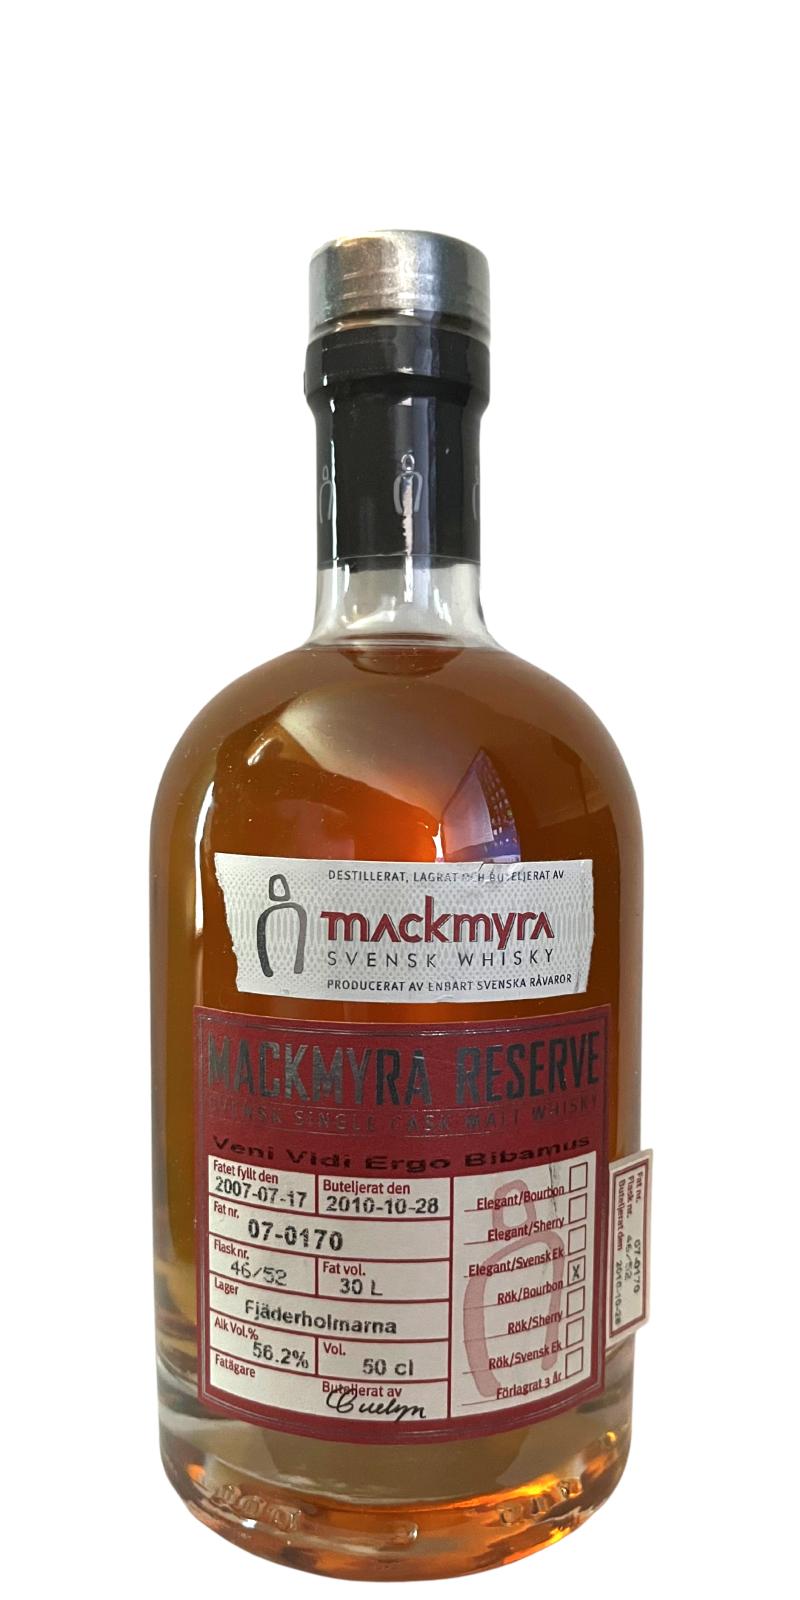 Mackmyra Reserve bourbon 56.2% 500ml